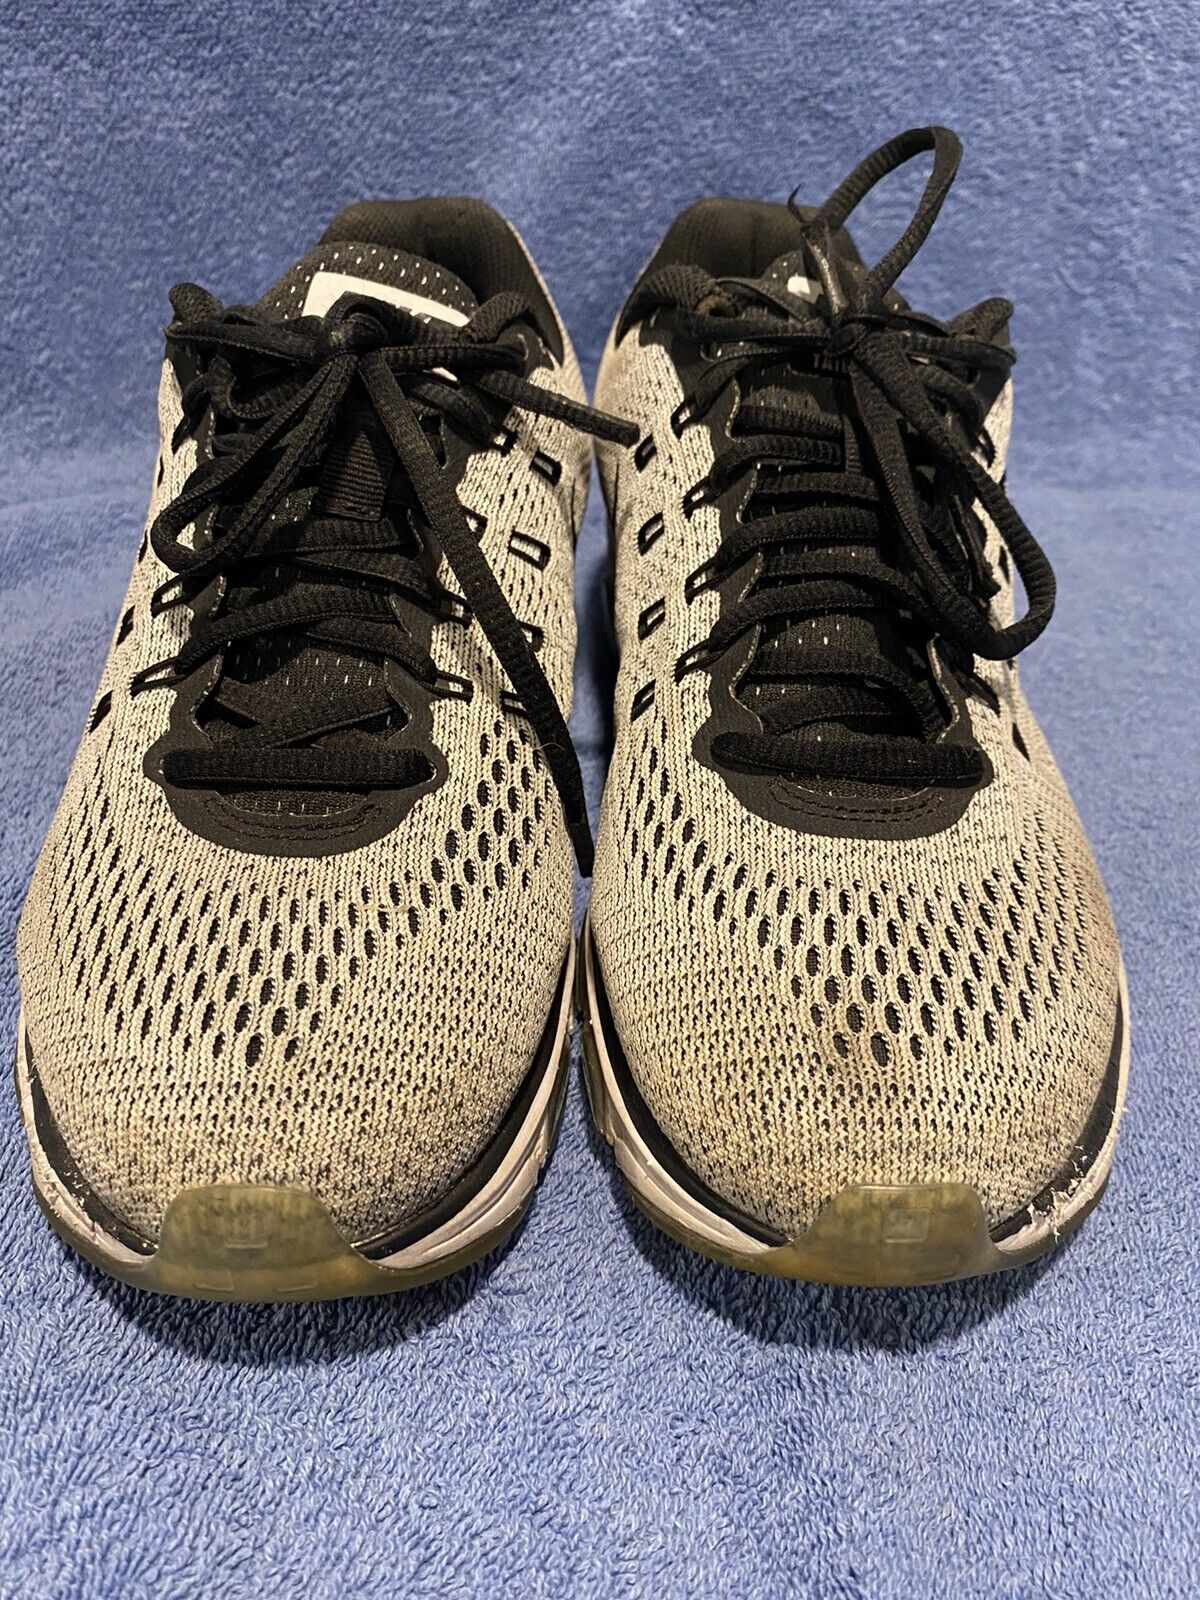 Used Worn Nike Air Tailwind 8 OREO Size 9.5 Shoes - image 4